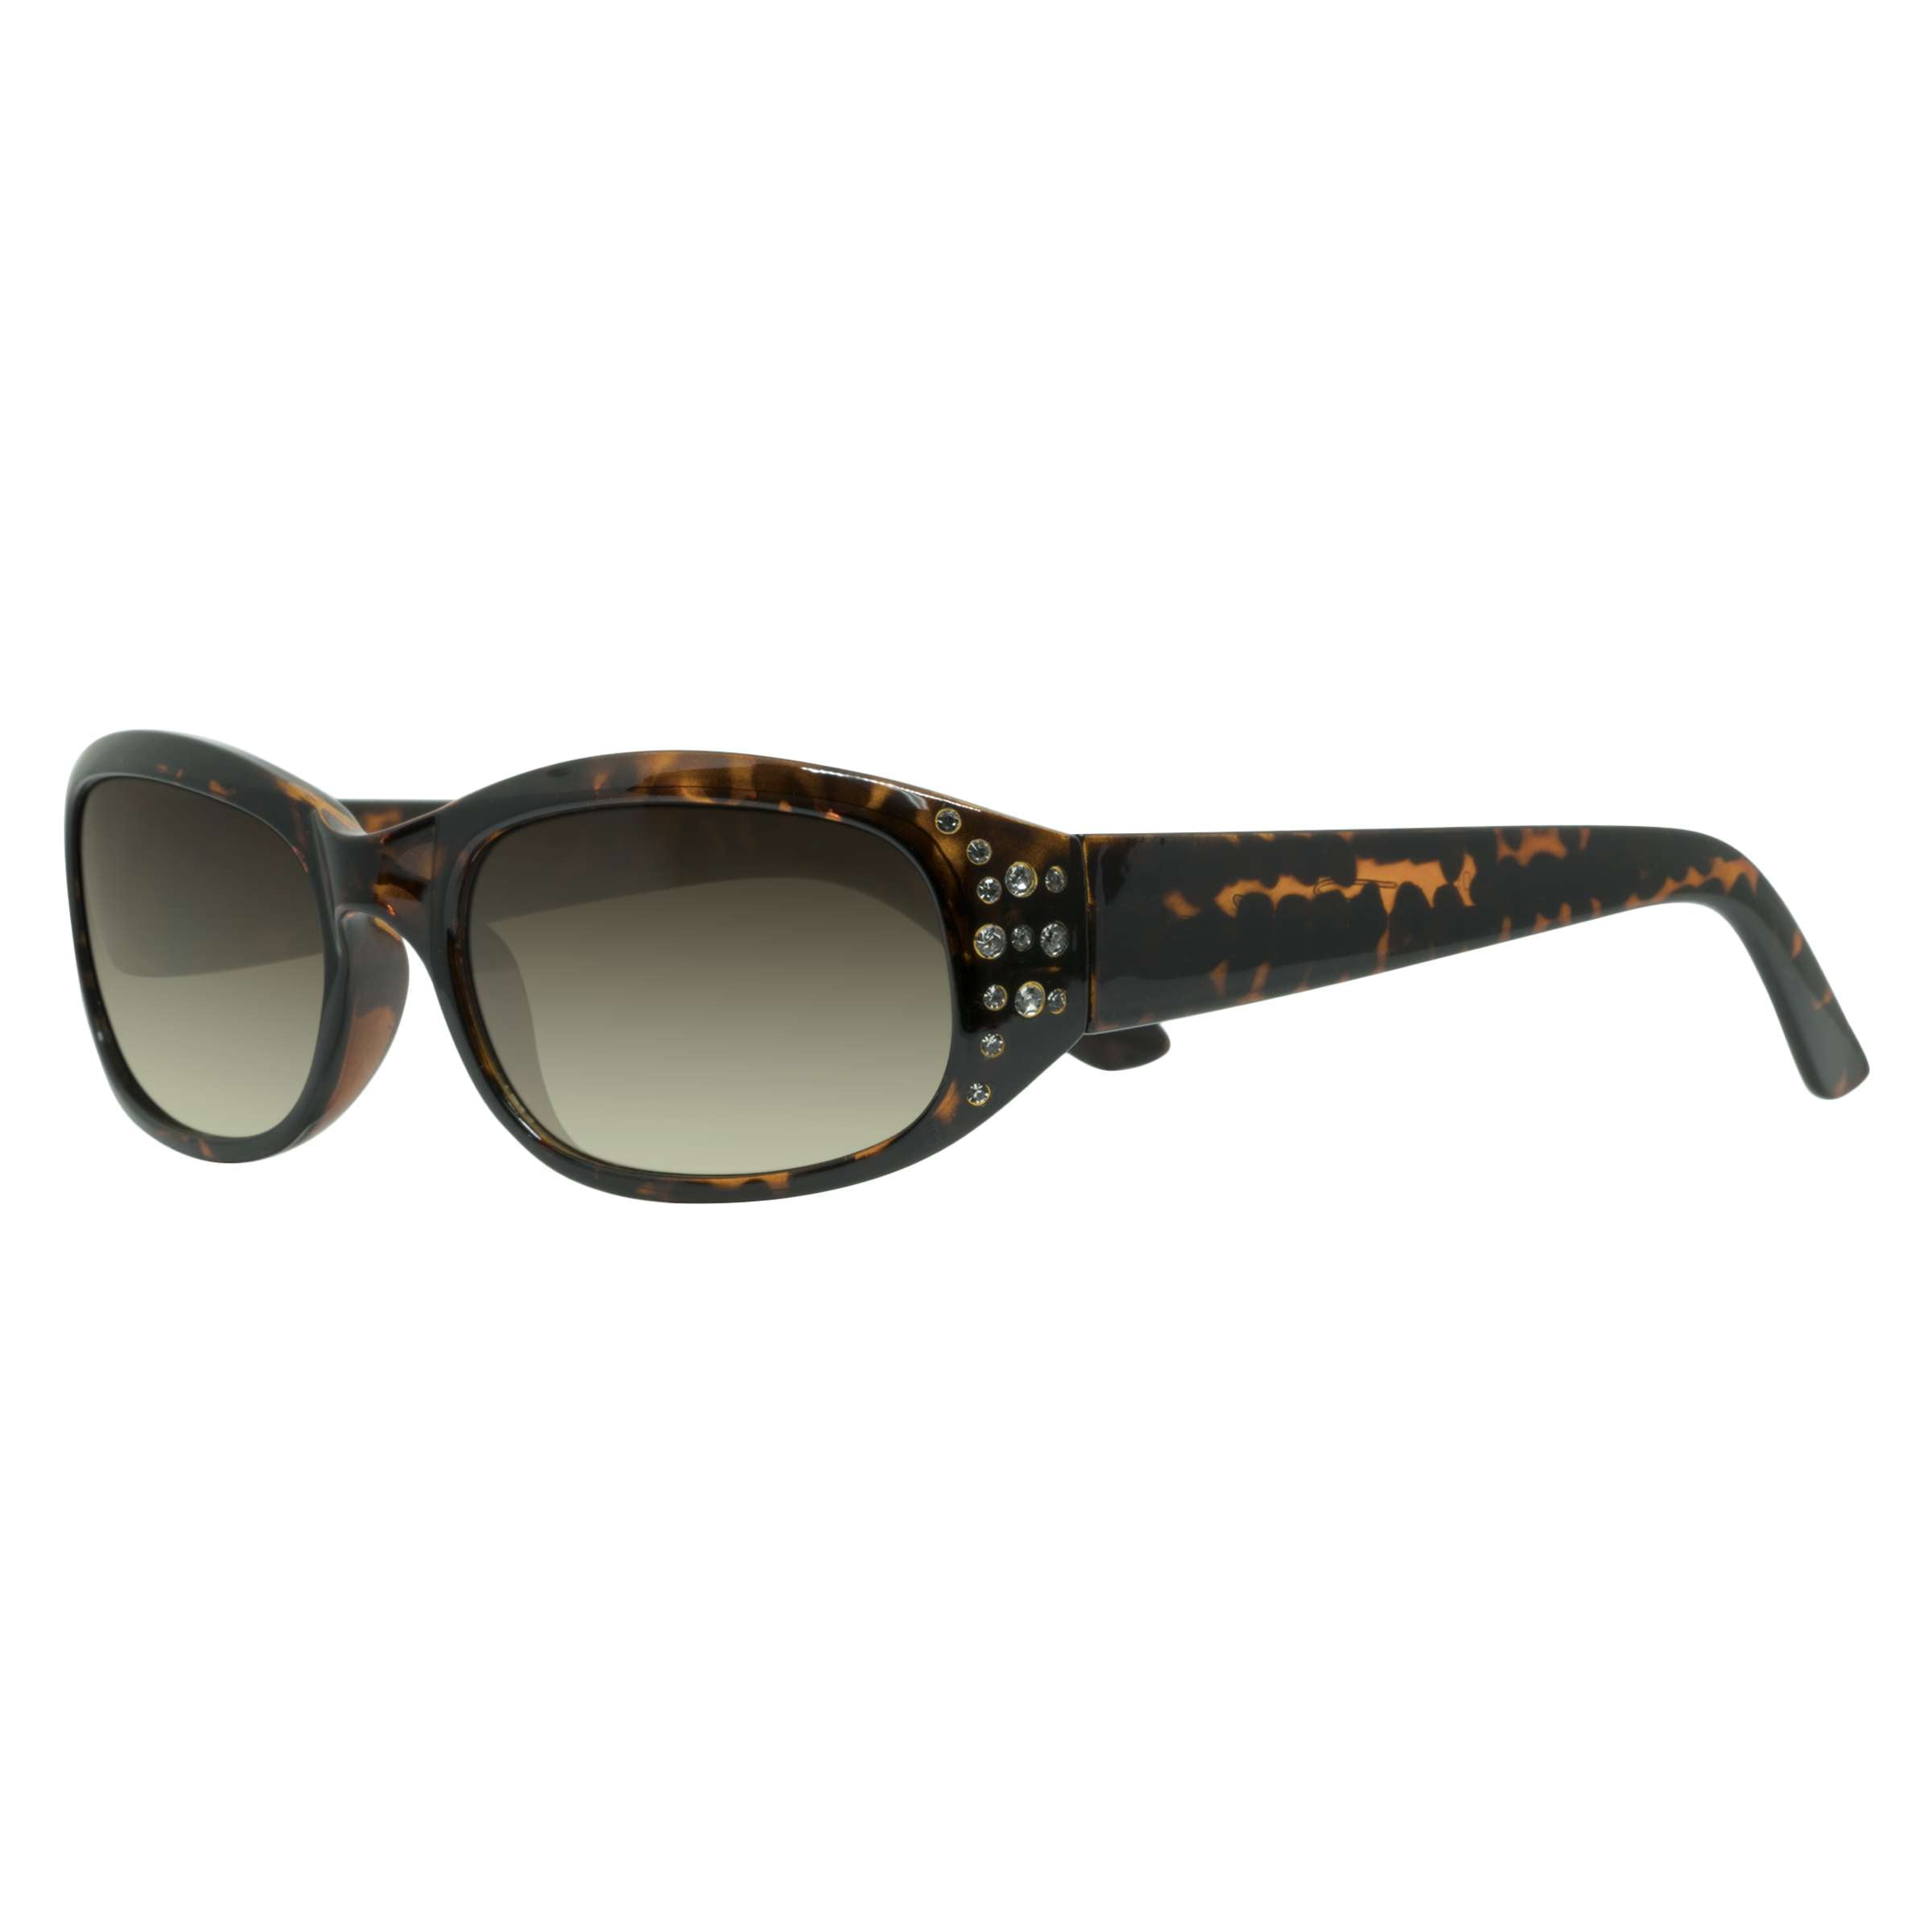 Piranha Eyewear Angel Dark Demi Sunglasses for Women with Brown